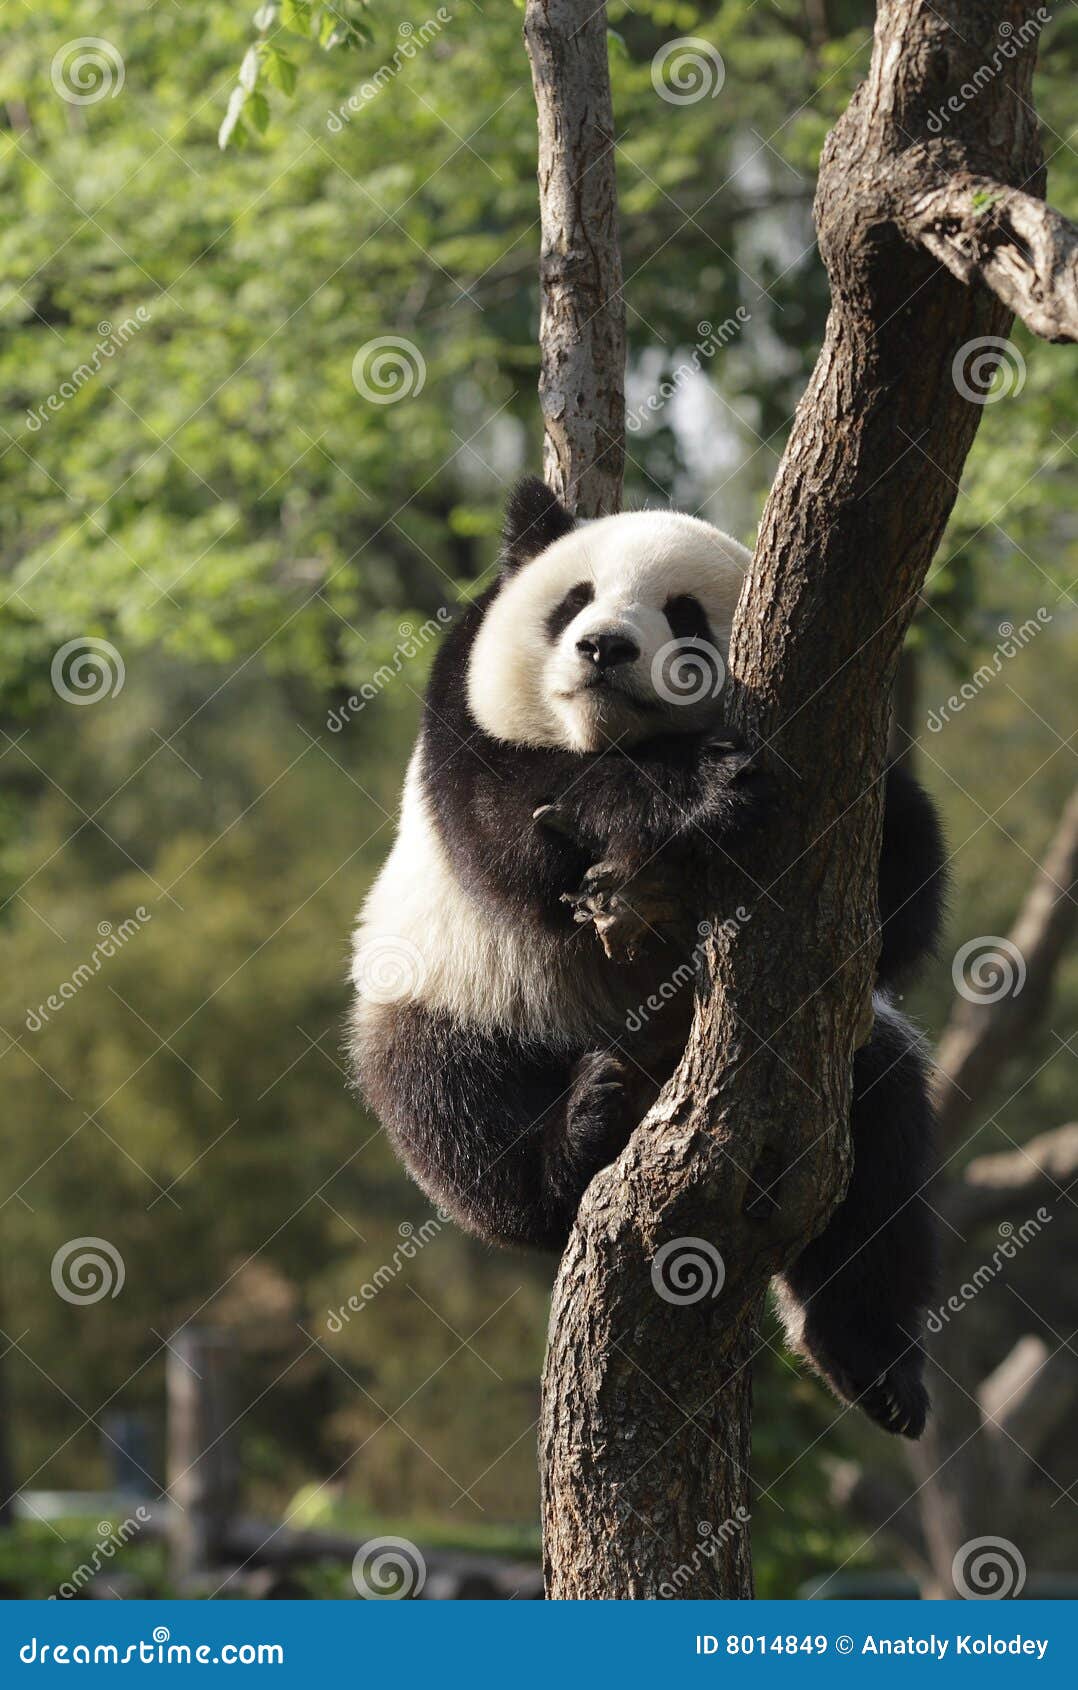 panda cub sleeping on a tree.version ii